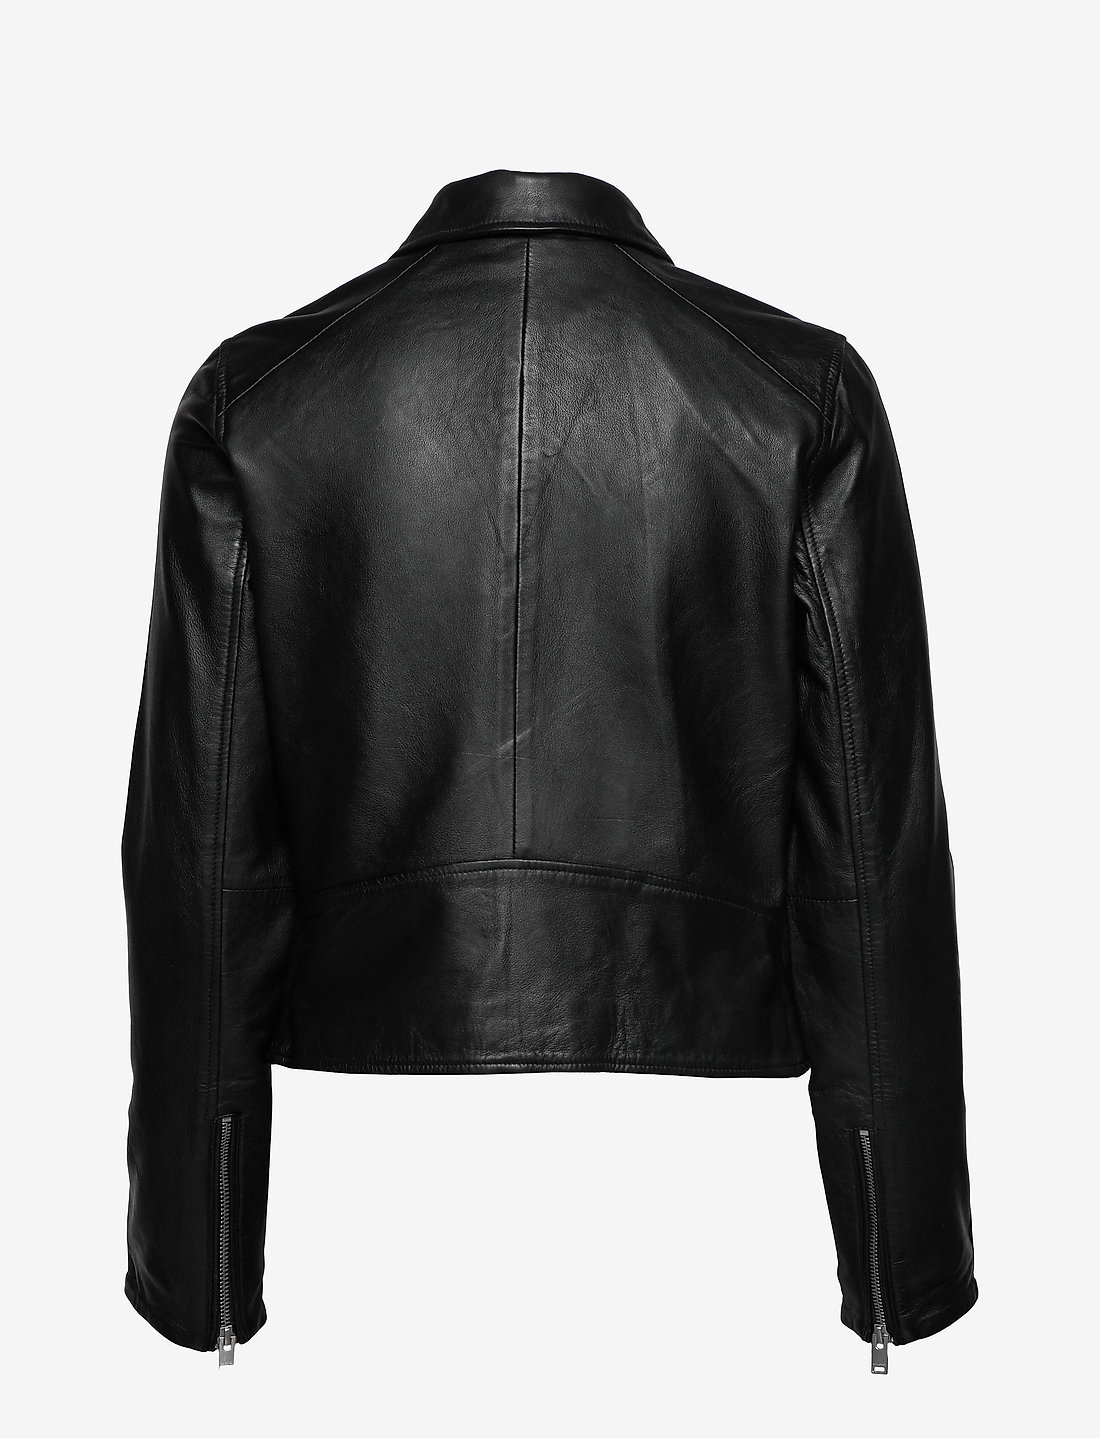 smerte Teenager I øvrigt Selected Femme Slfkatie Leather Jacket - 95.99 €. Buy Leather jackets from  Selected Femme online at Boozt.com. Fast delivery and easy returns